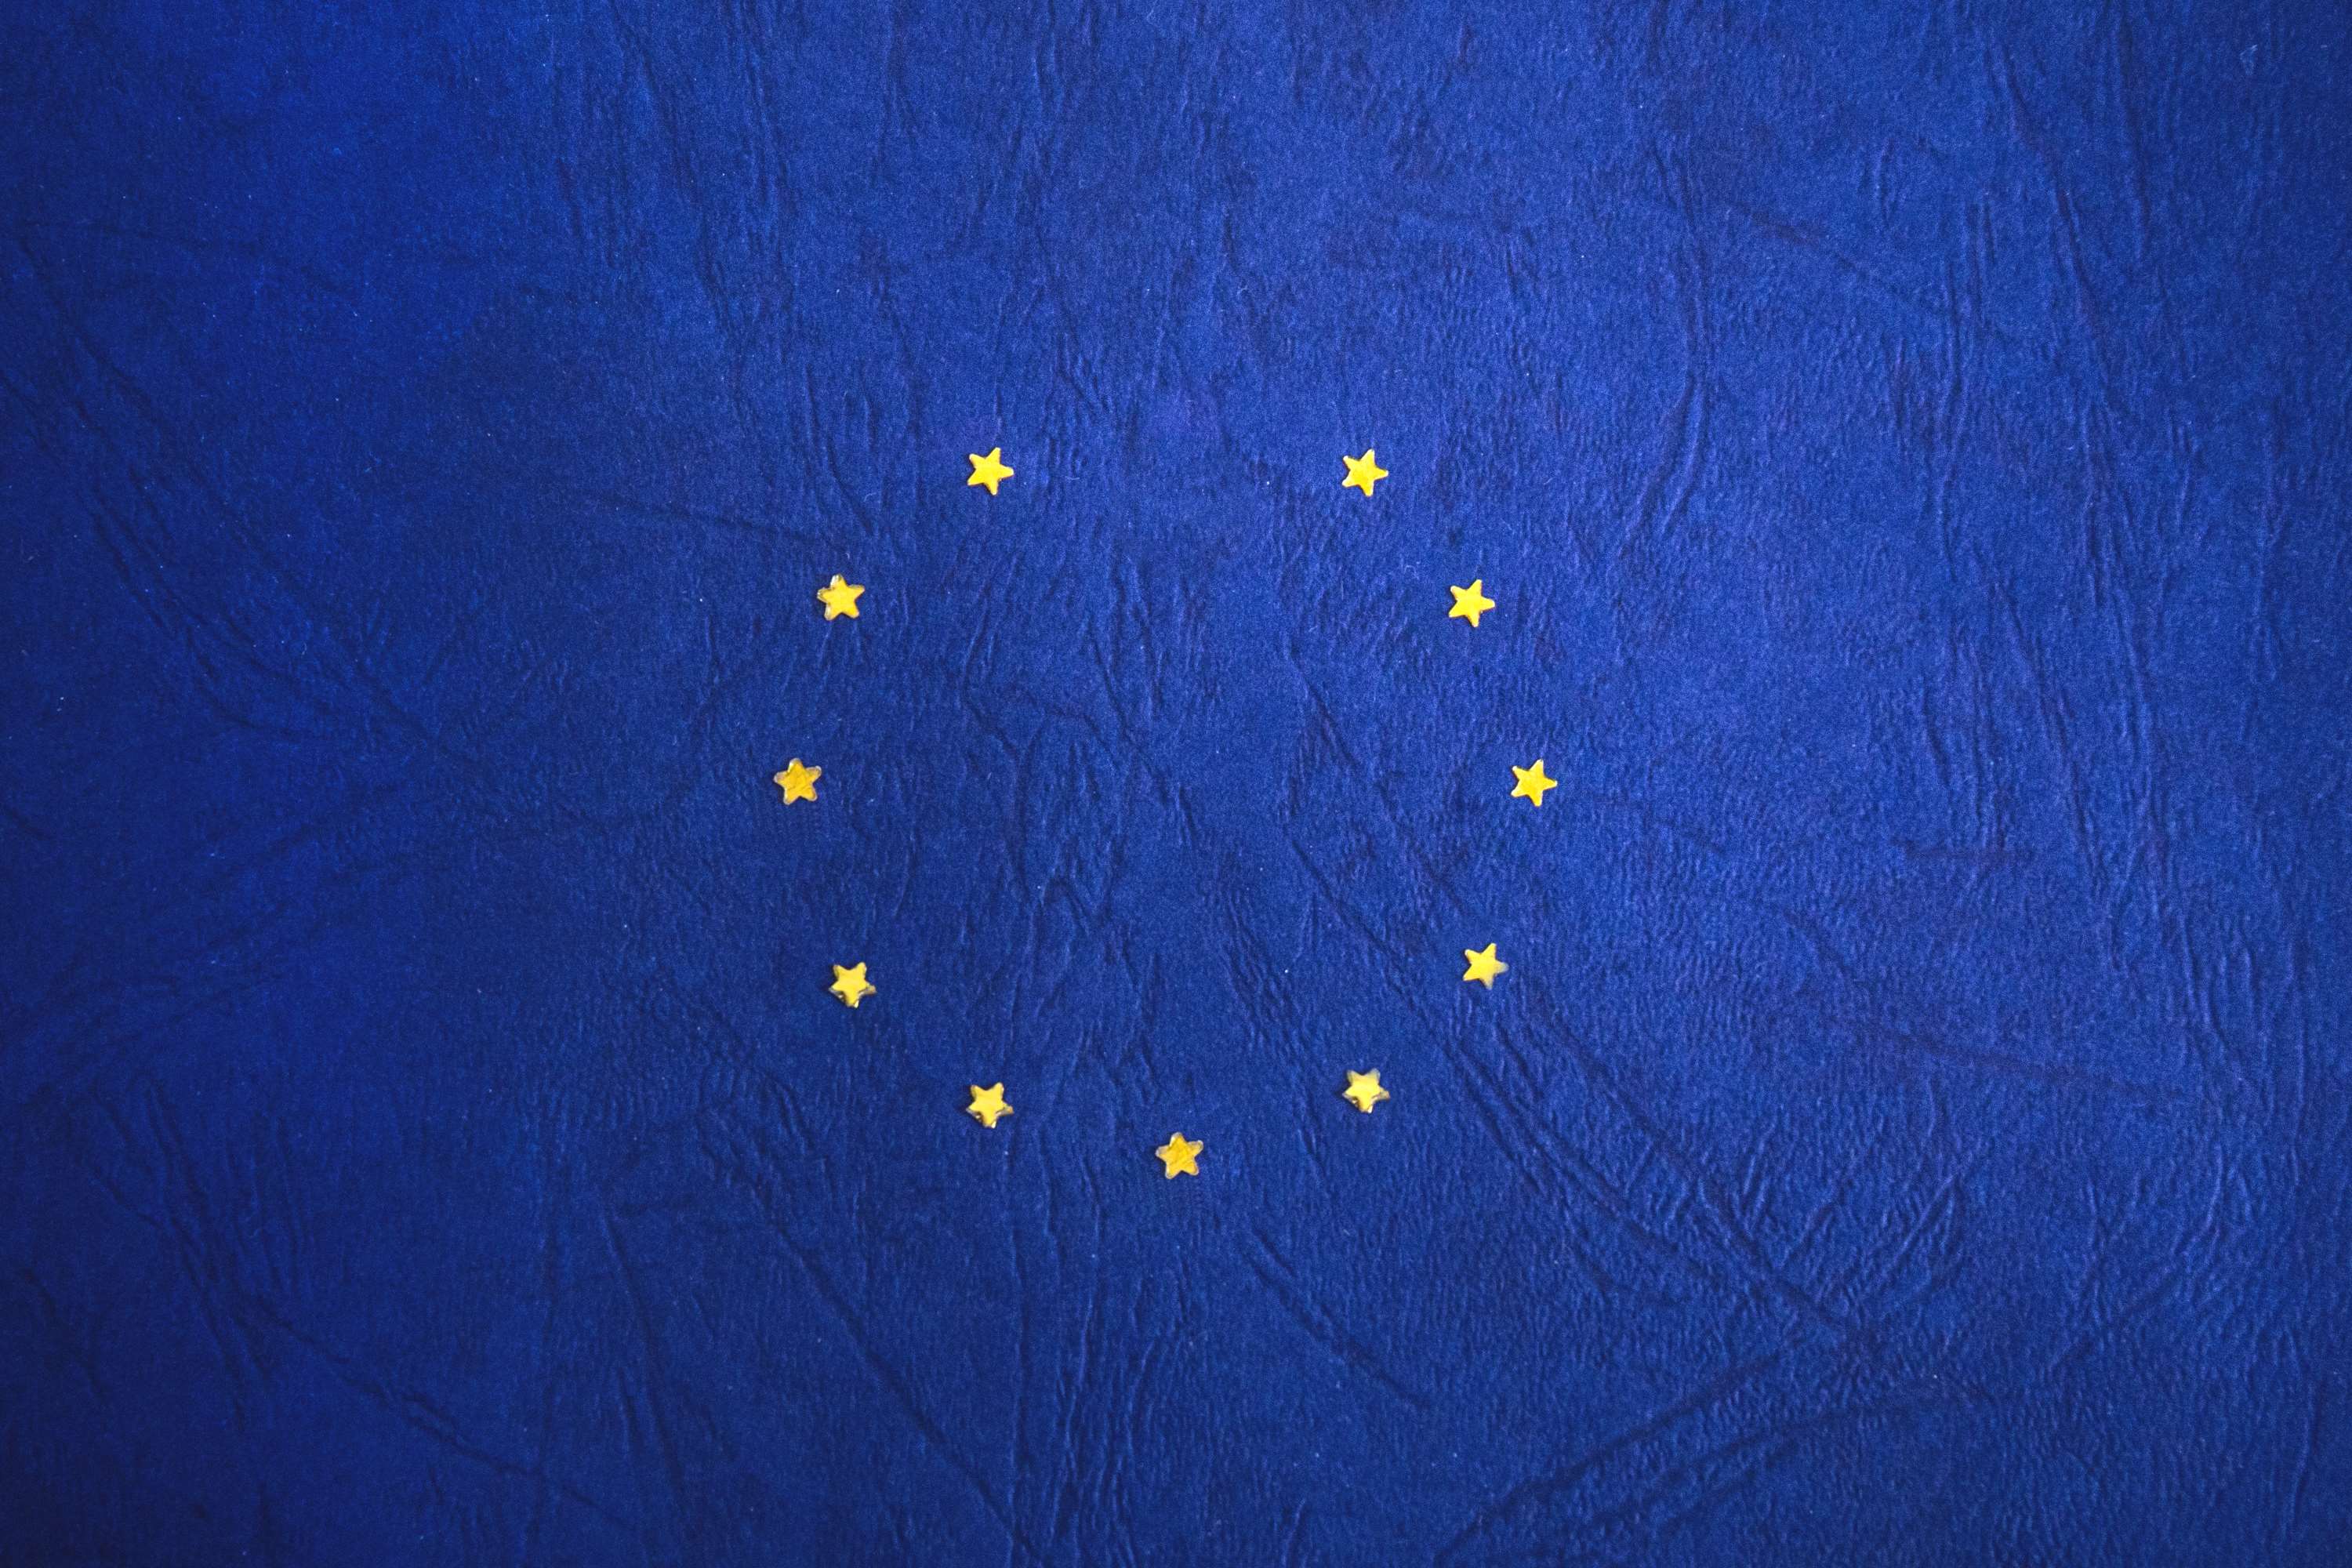 brexit, eu, europe, european flag, european union, flag, stars wallpaper